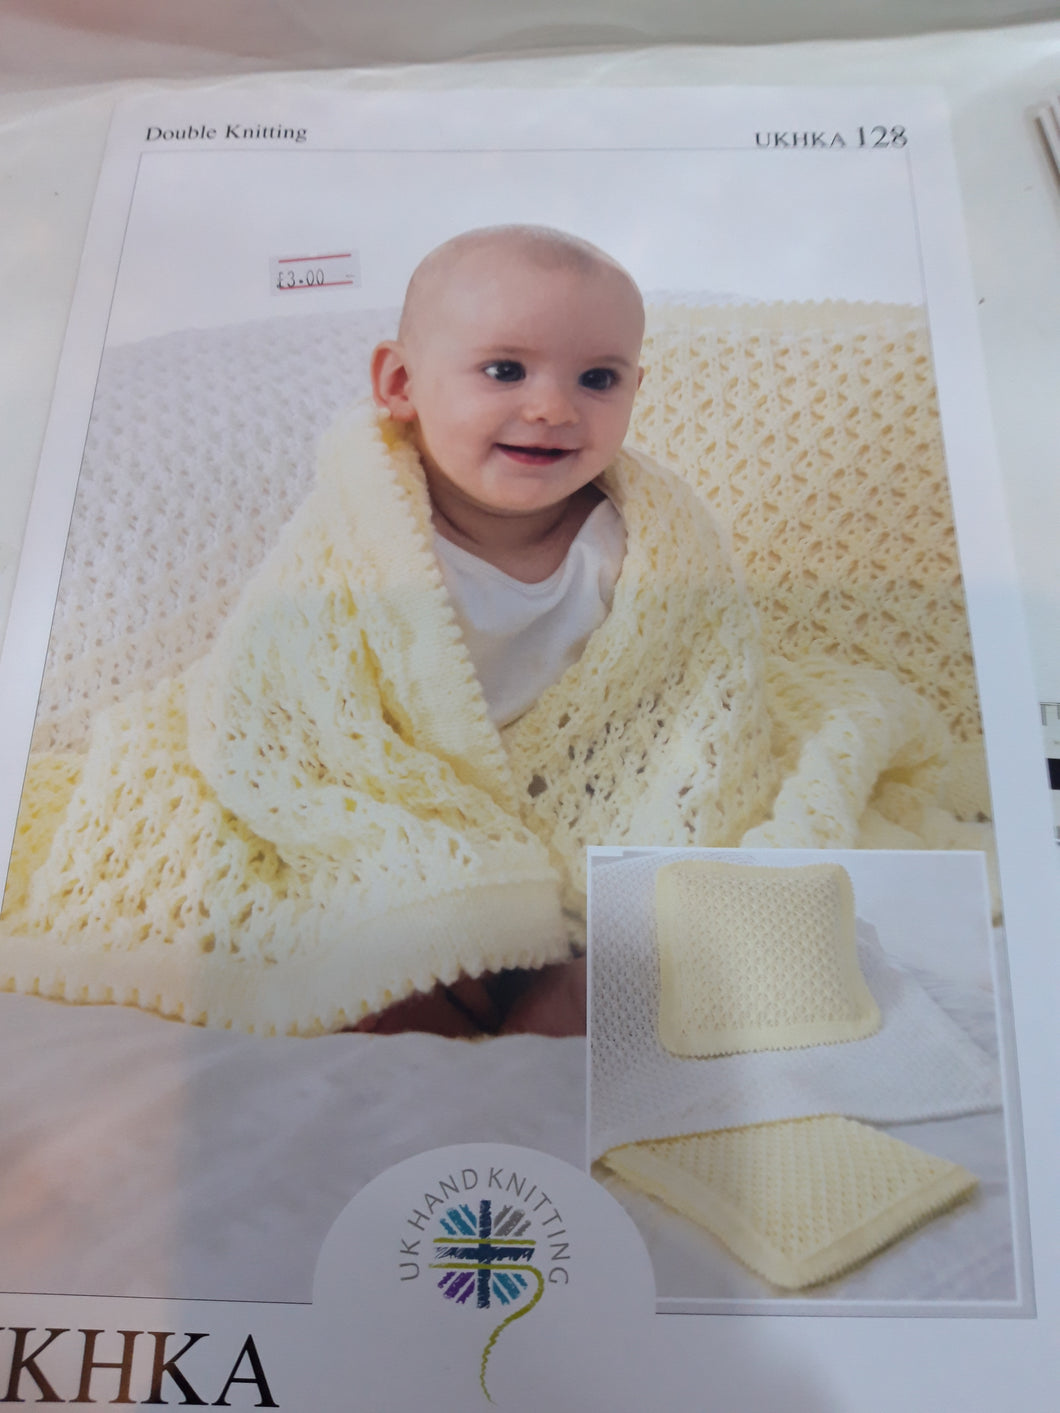 UKHKA 128 - Double Knitting - Blankets and Cushion